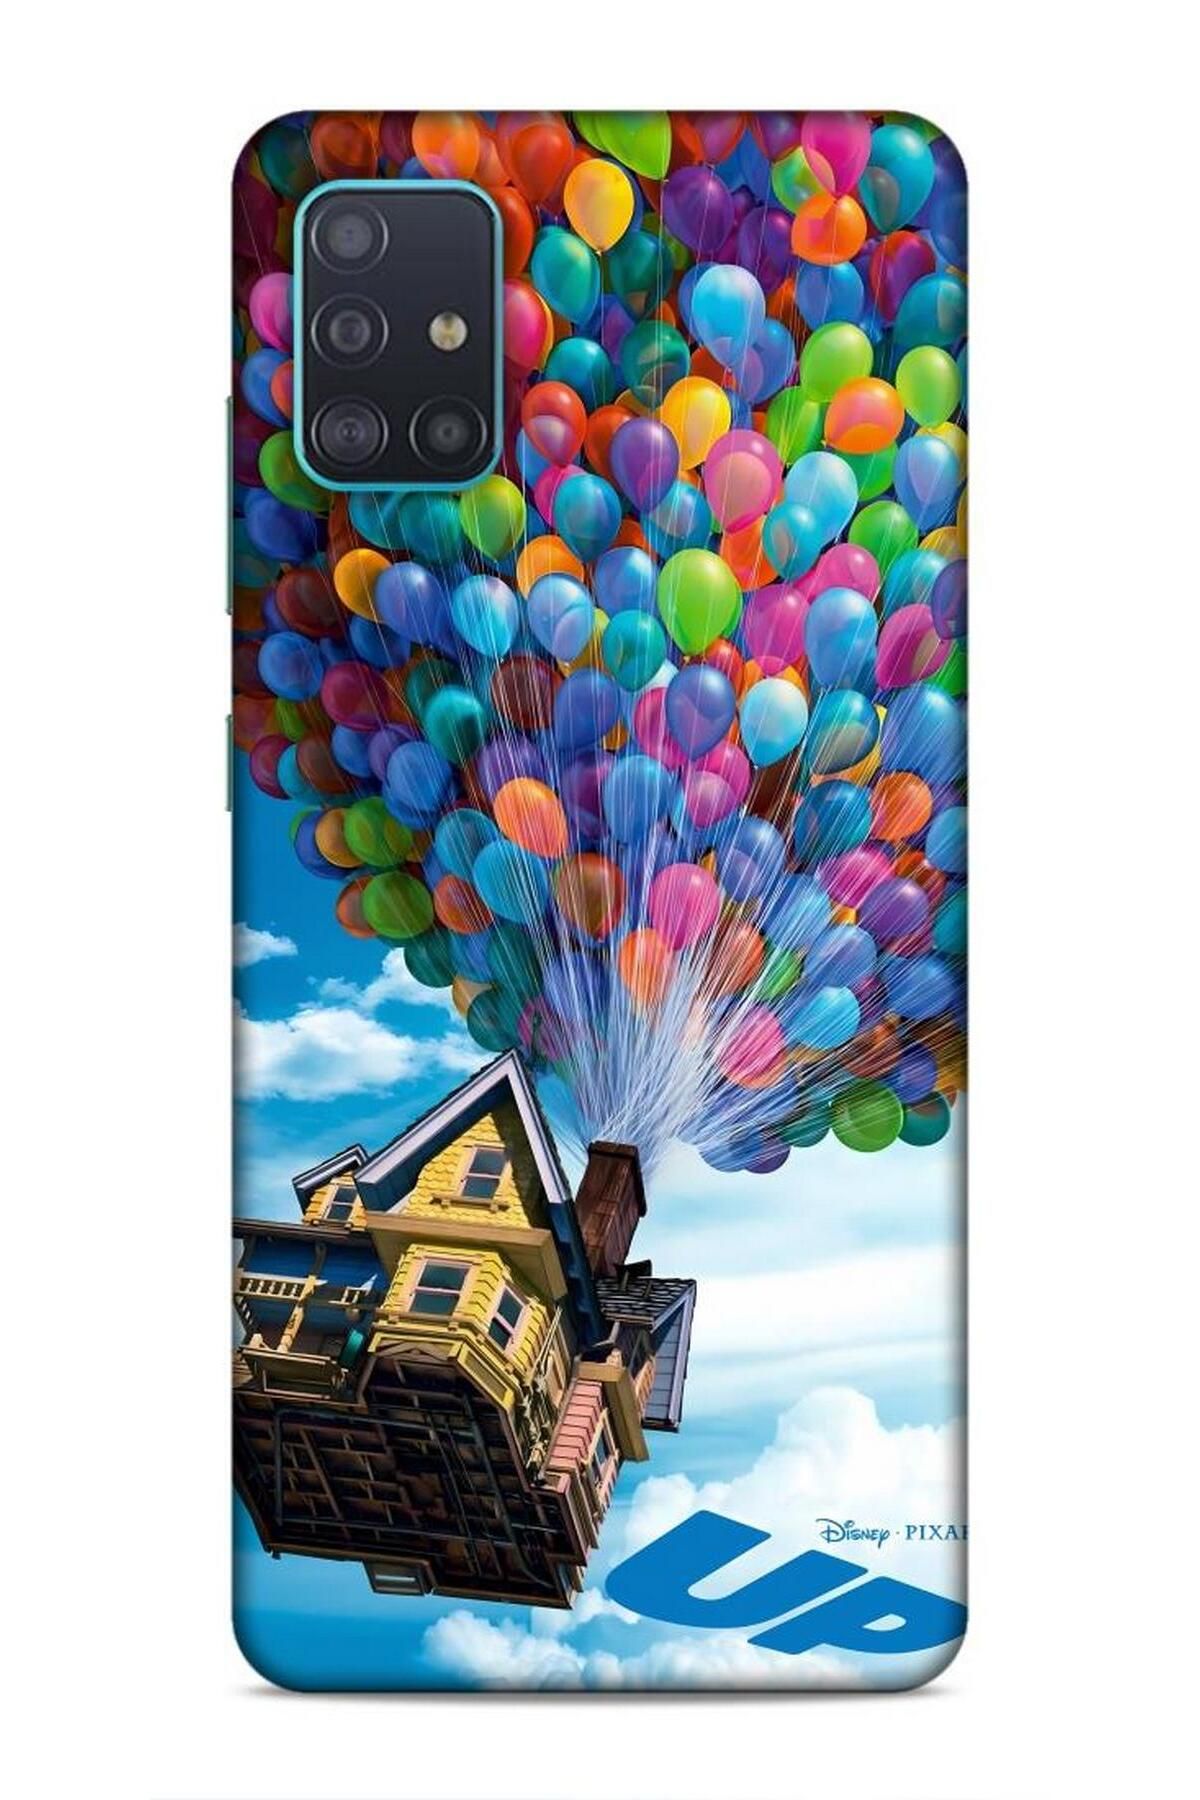 Lopard Samsung Galaxy A51 Kılıf Animasyon 13 Yukarı Bak Up Case Kapak